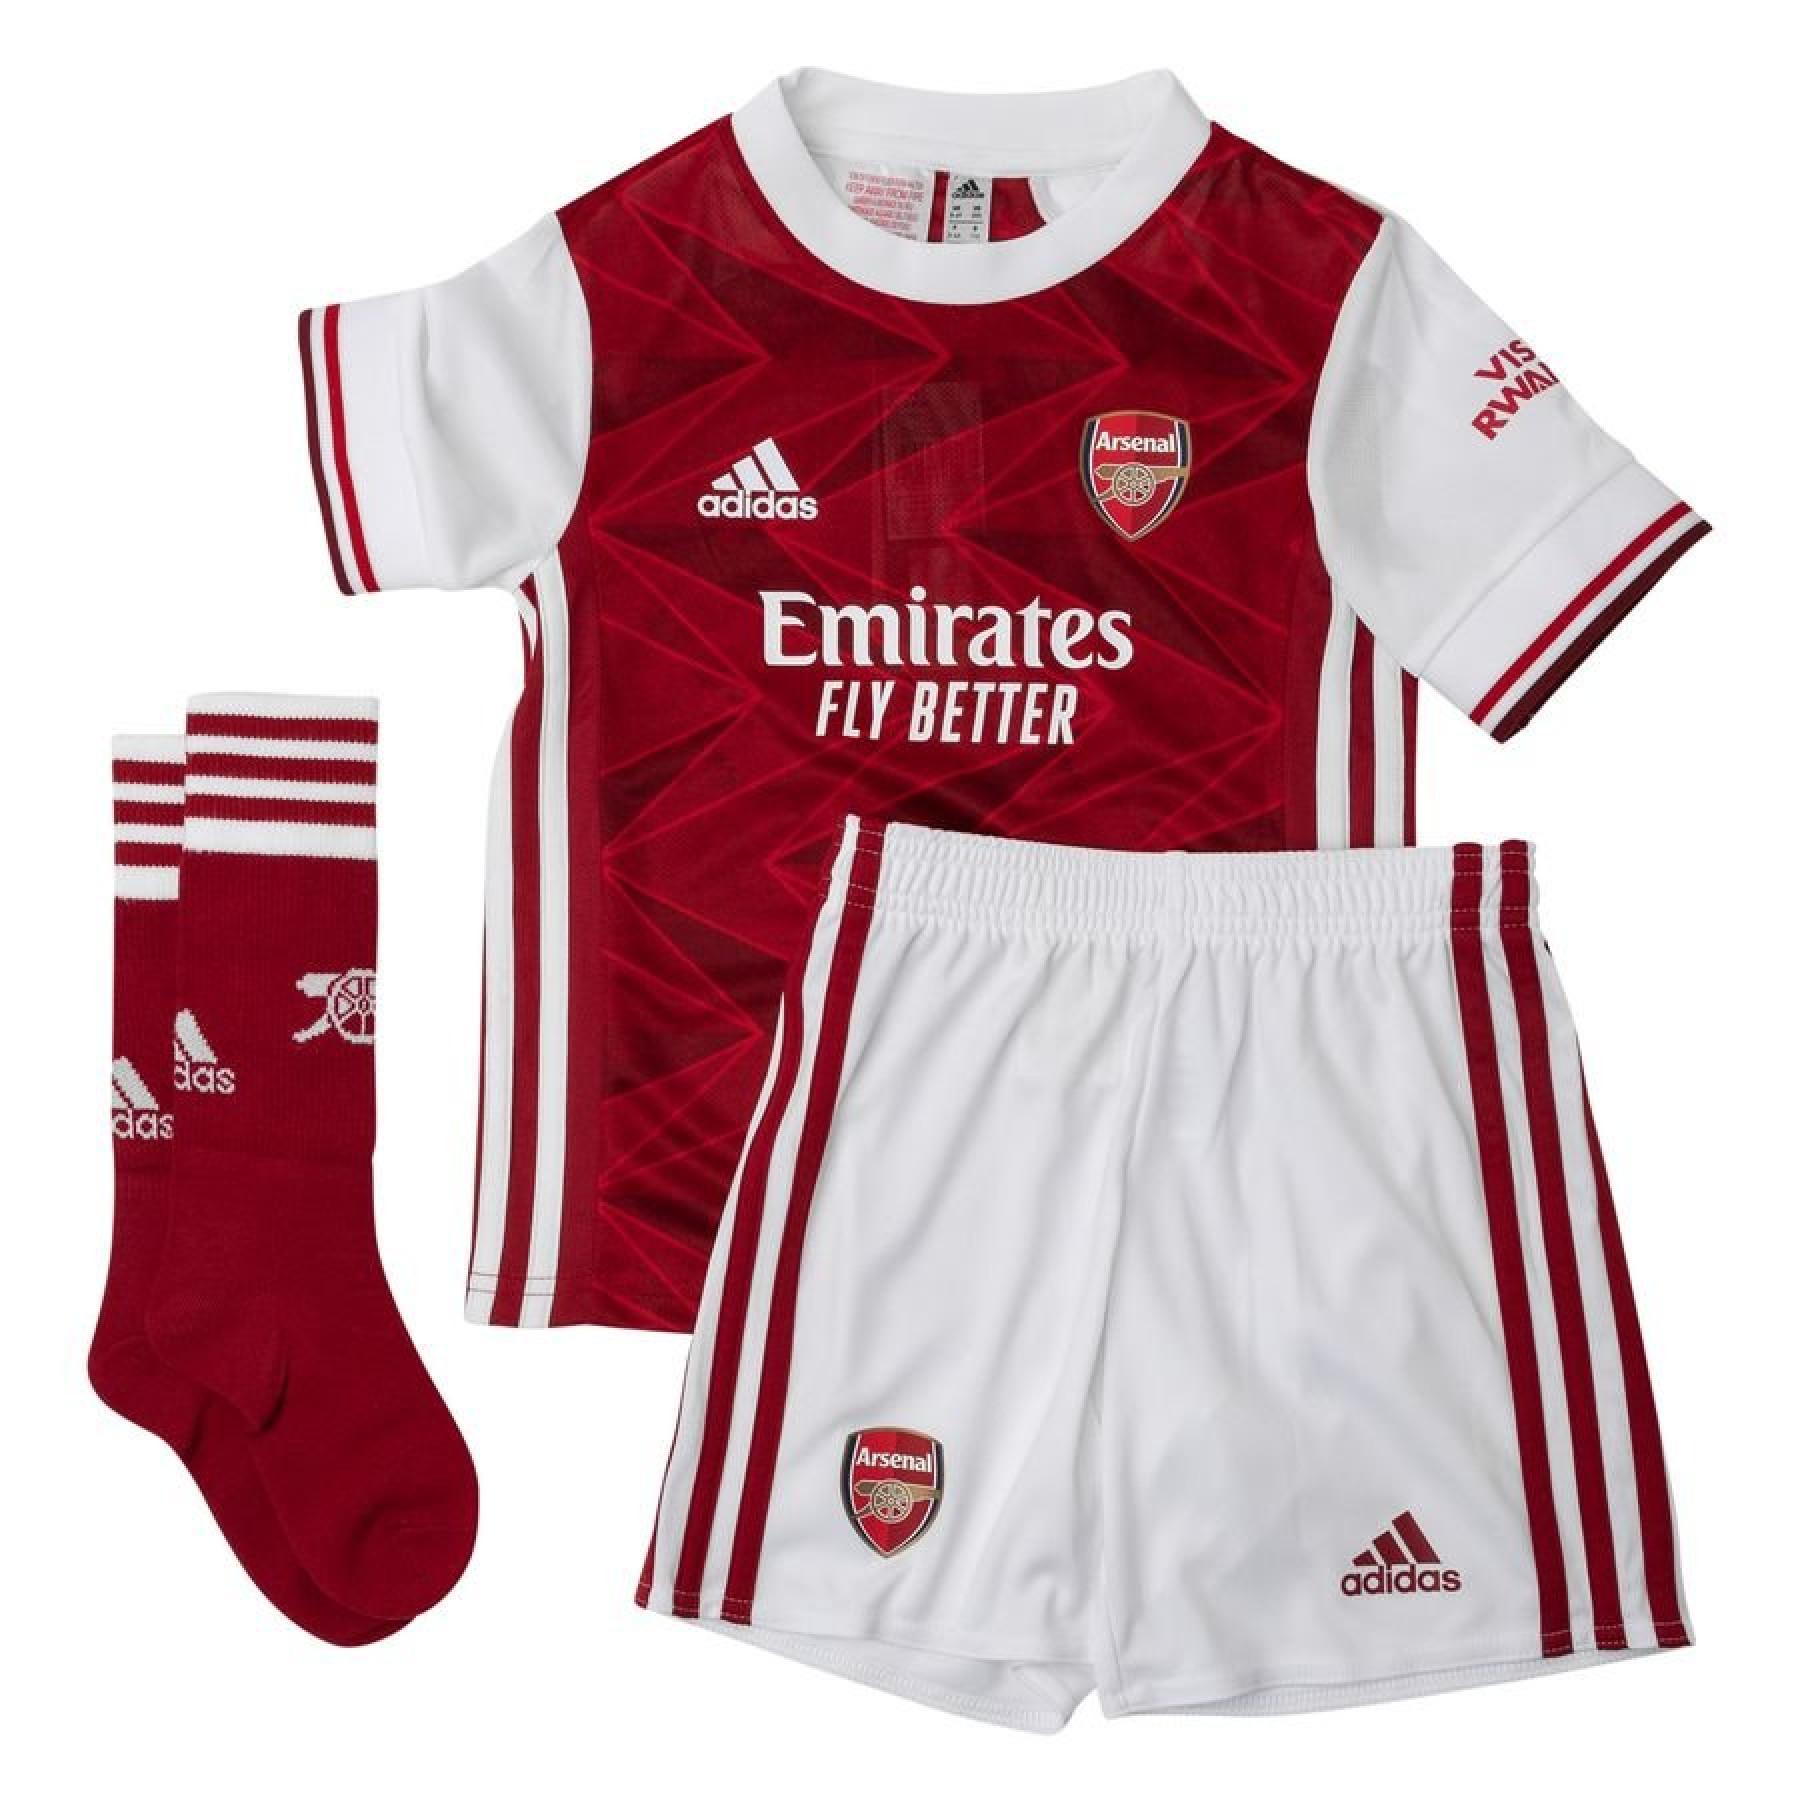 Mini-kit kid home Arsenal 2020/21 - Arsenal FC - Premier League - Fans